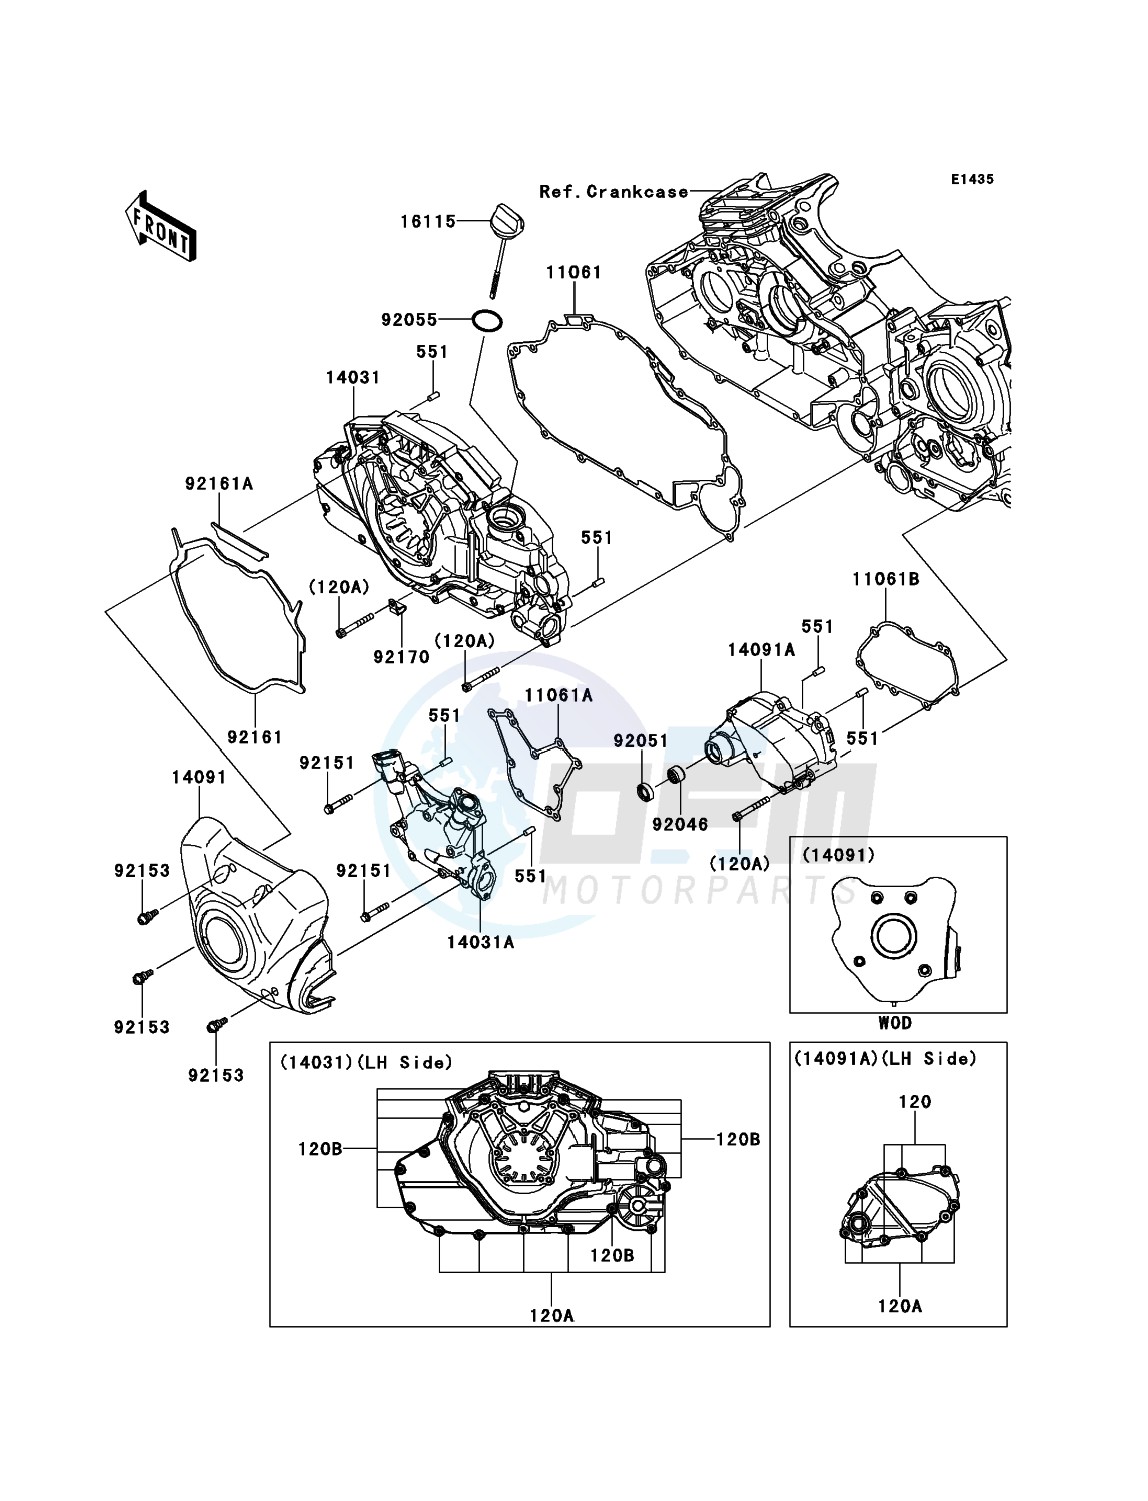 Left Engine Cover(s) blueprint